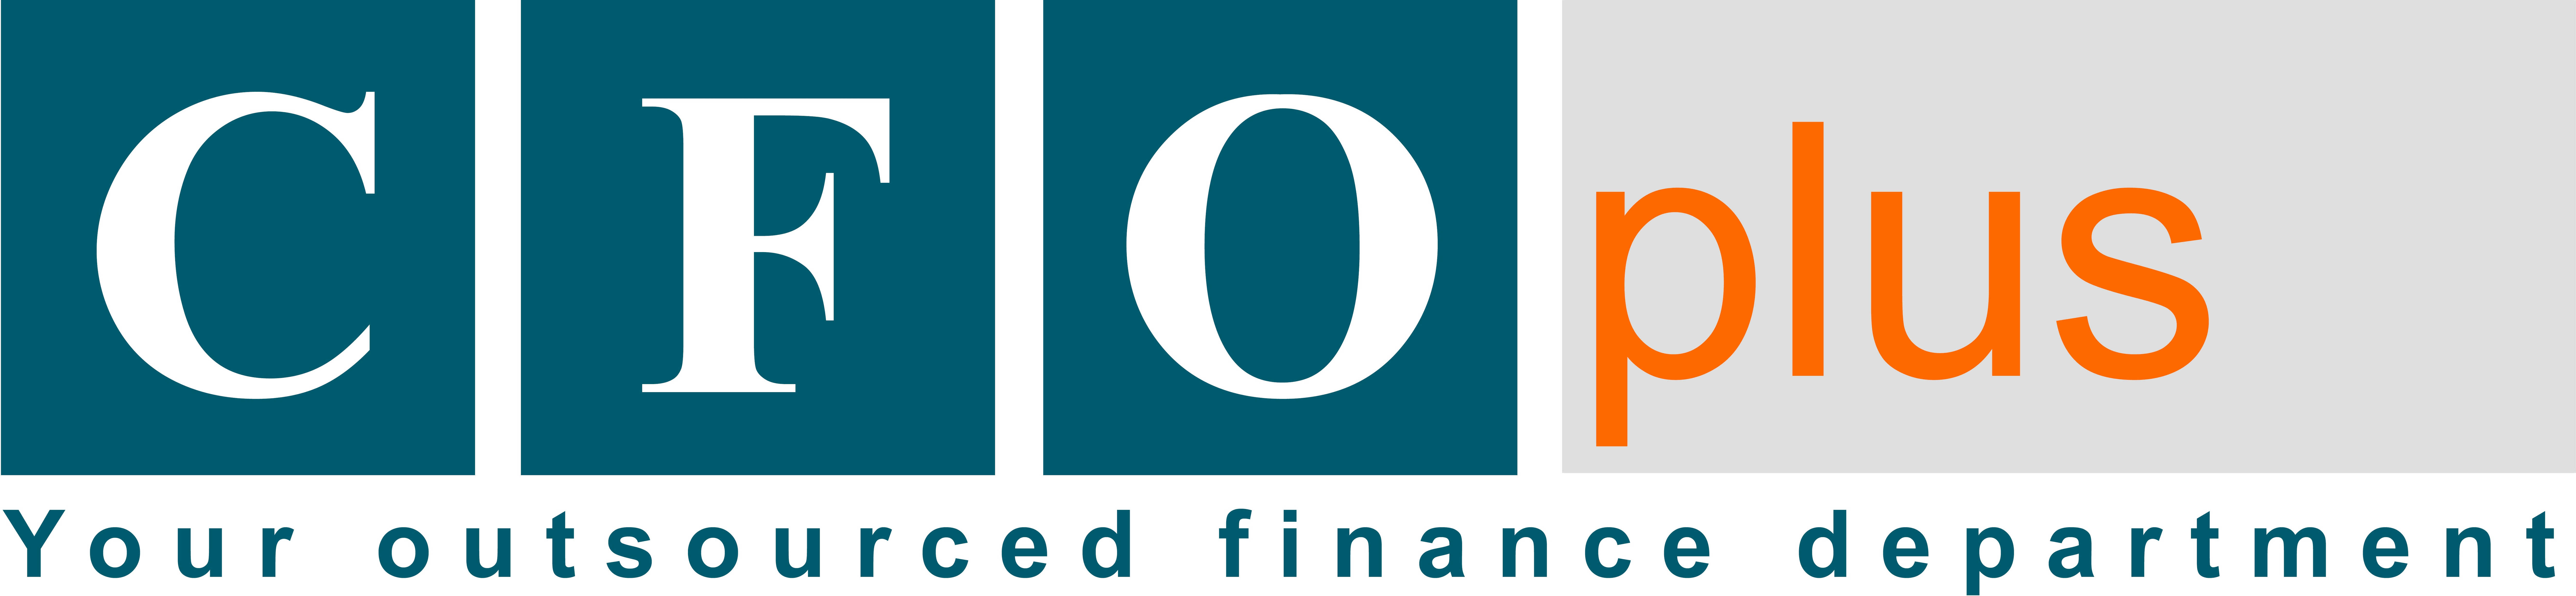 CFO Plus Logo High Res